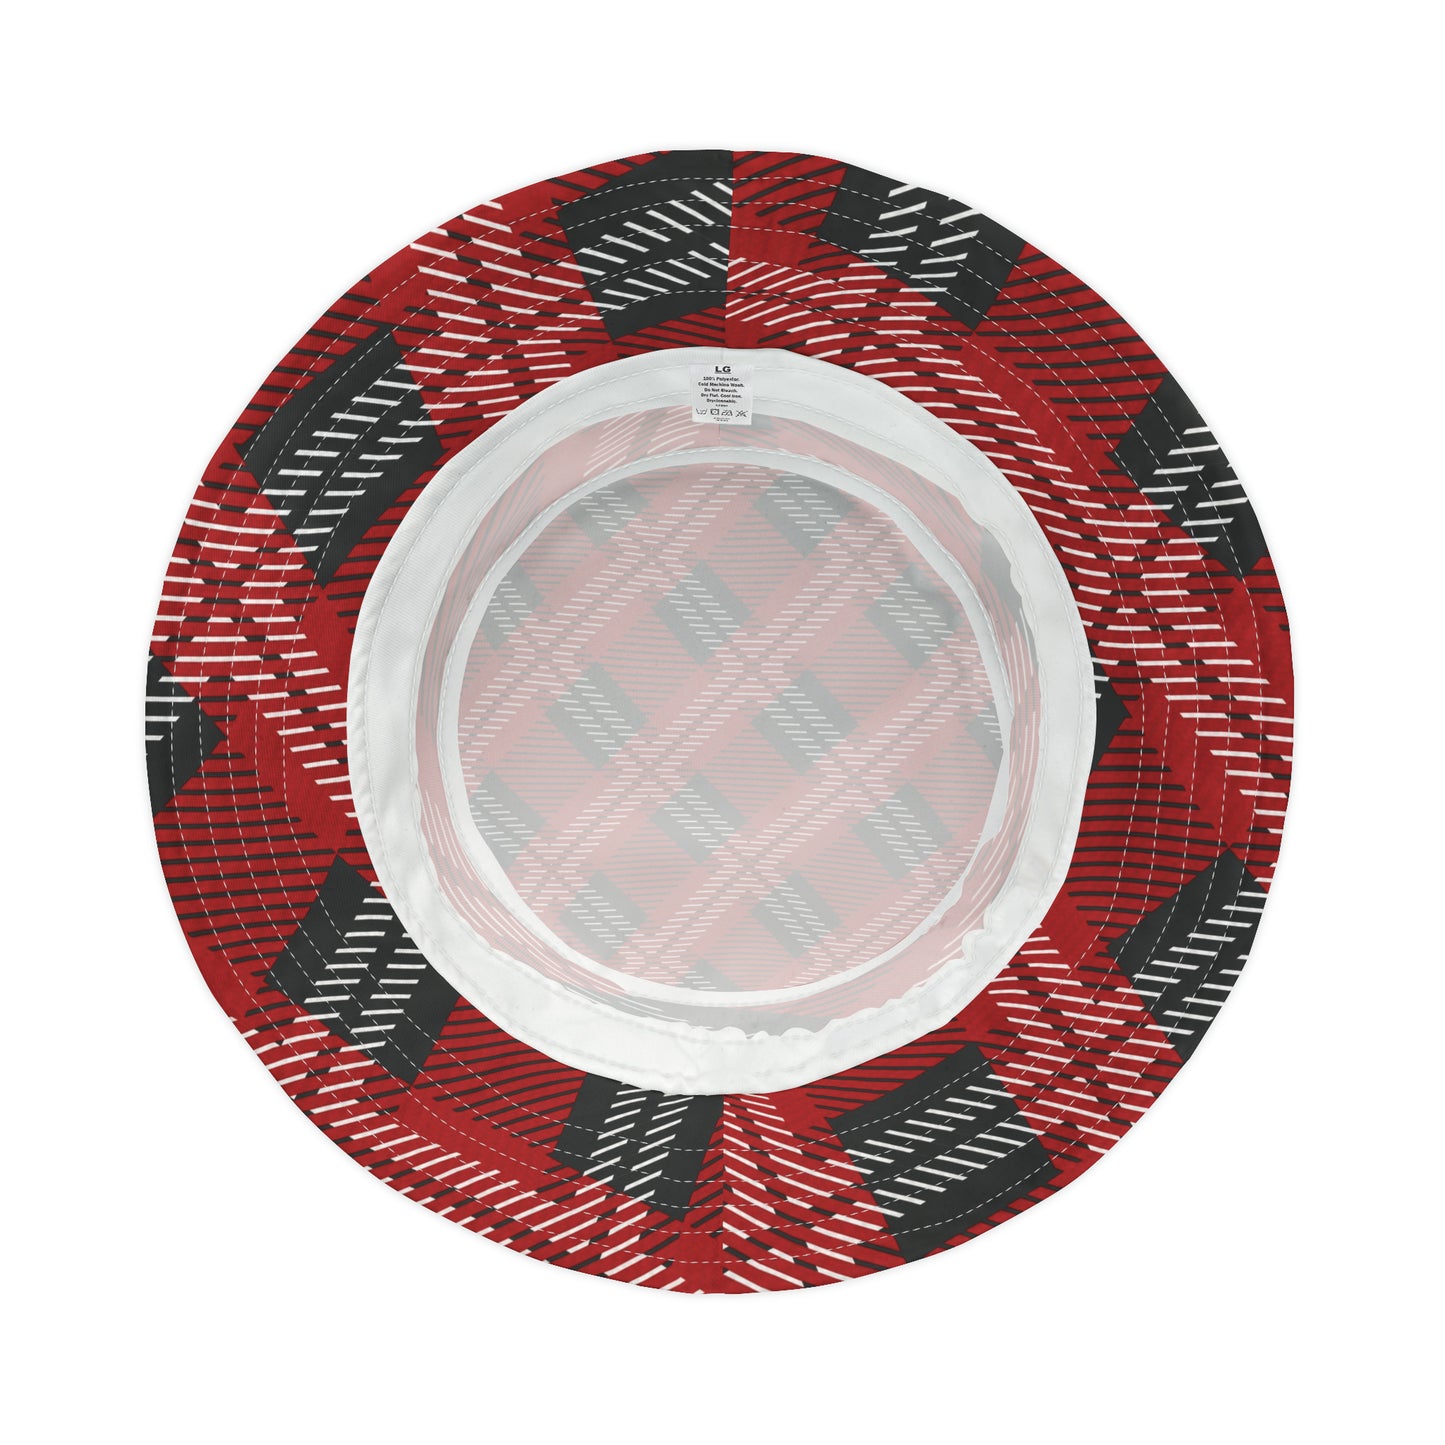 Scottish Plaid *Red-Black-White Bucket Hat